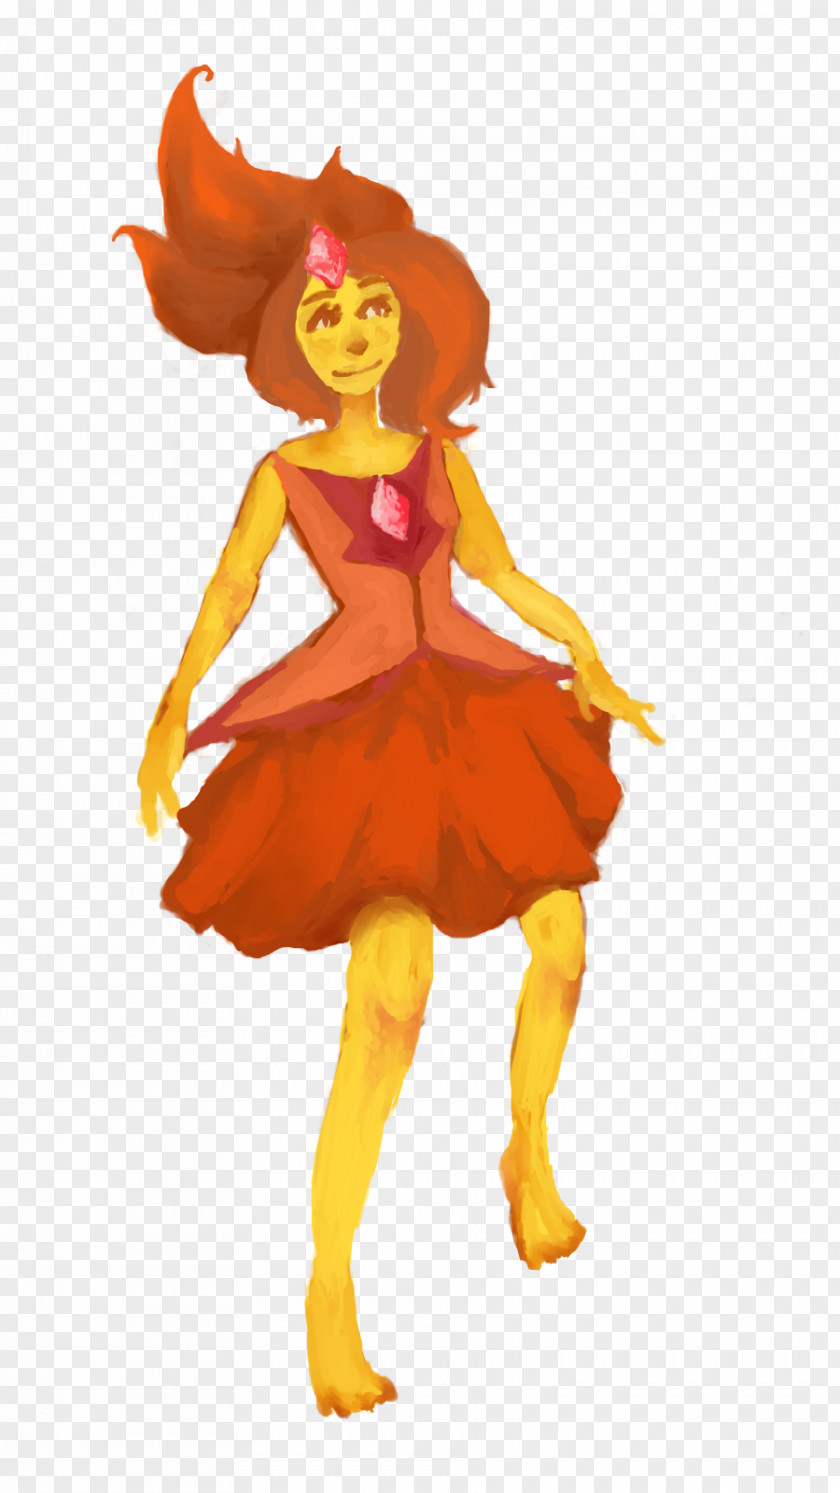 Finn The Human Flame Princess Line Costume Character PNG